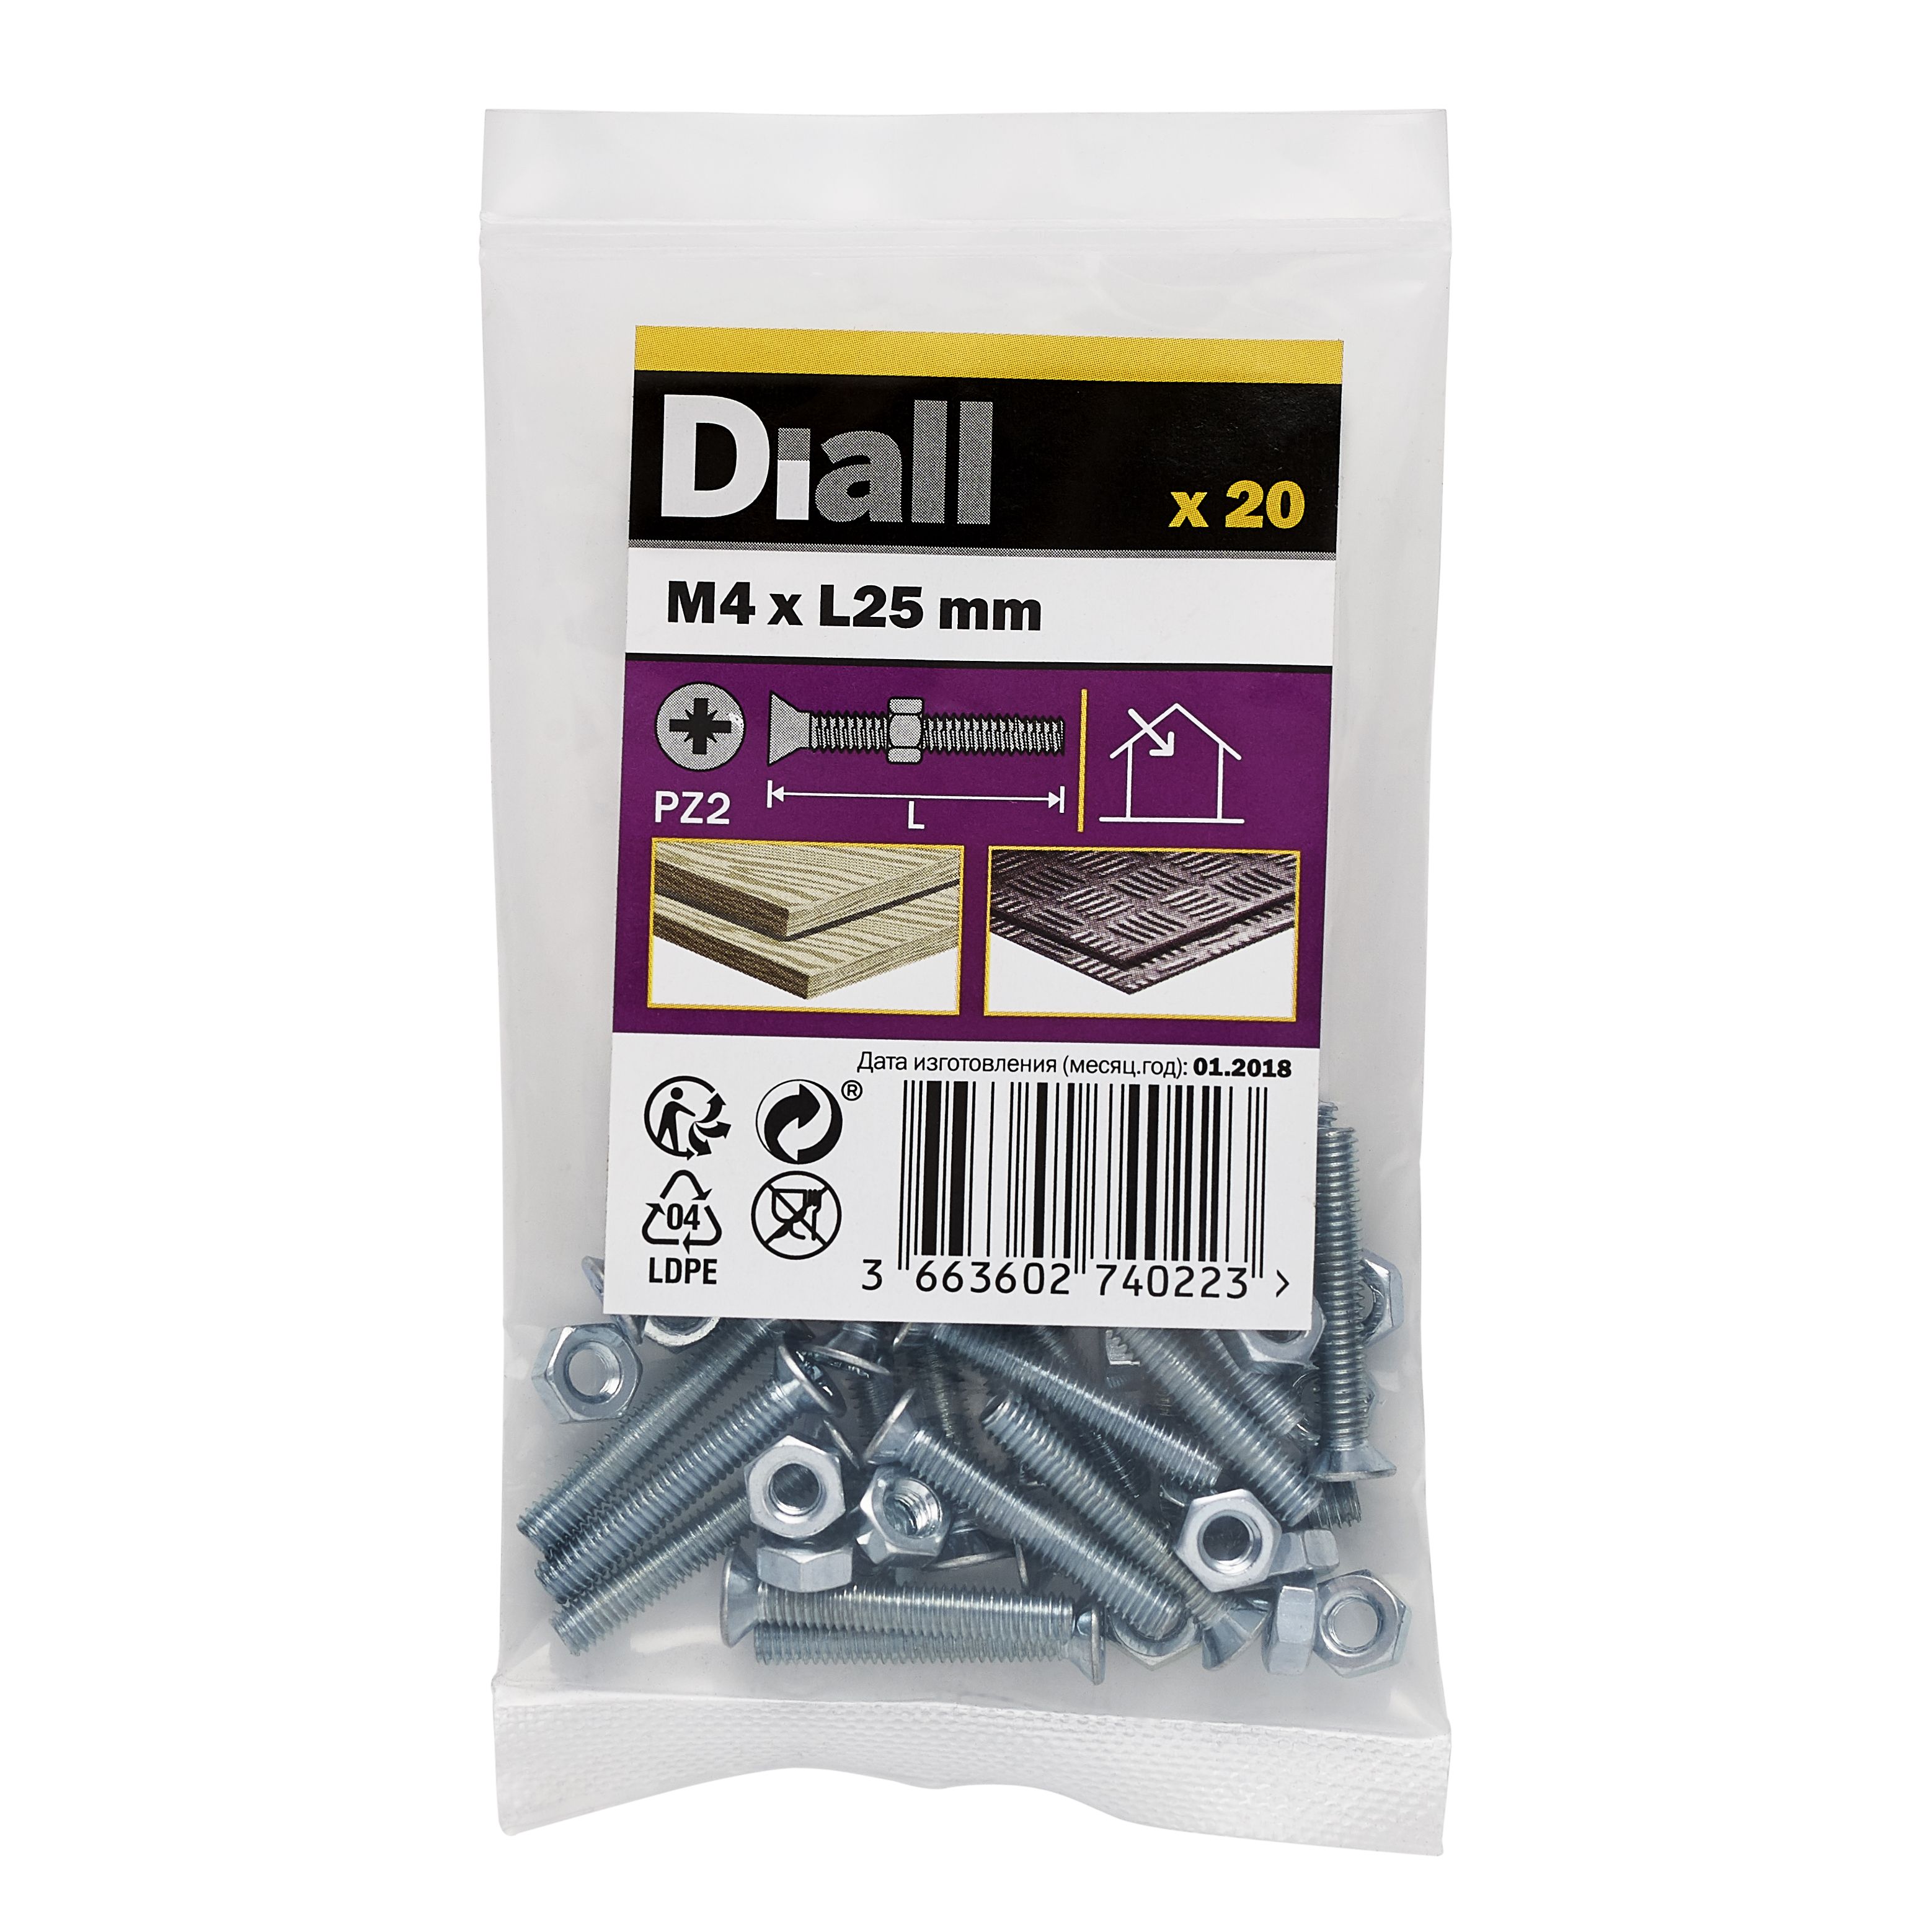 Diall M4 Pozidriv Countersunk Zinc-plated Carbon steel Machine screw & nut (Dia)4mm (L)25mm, Pack of 20